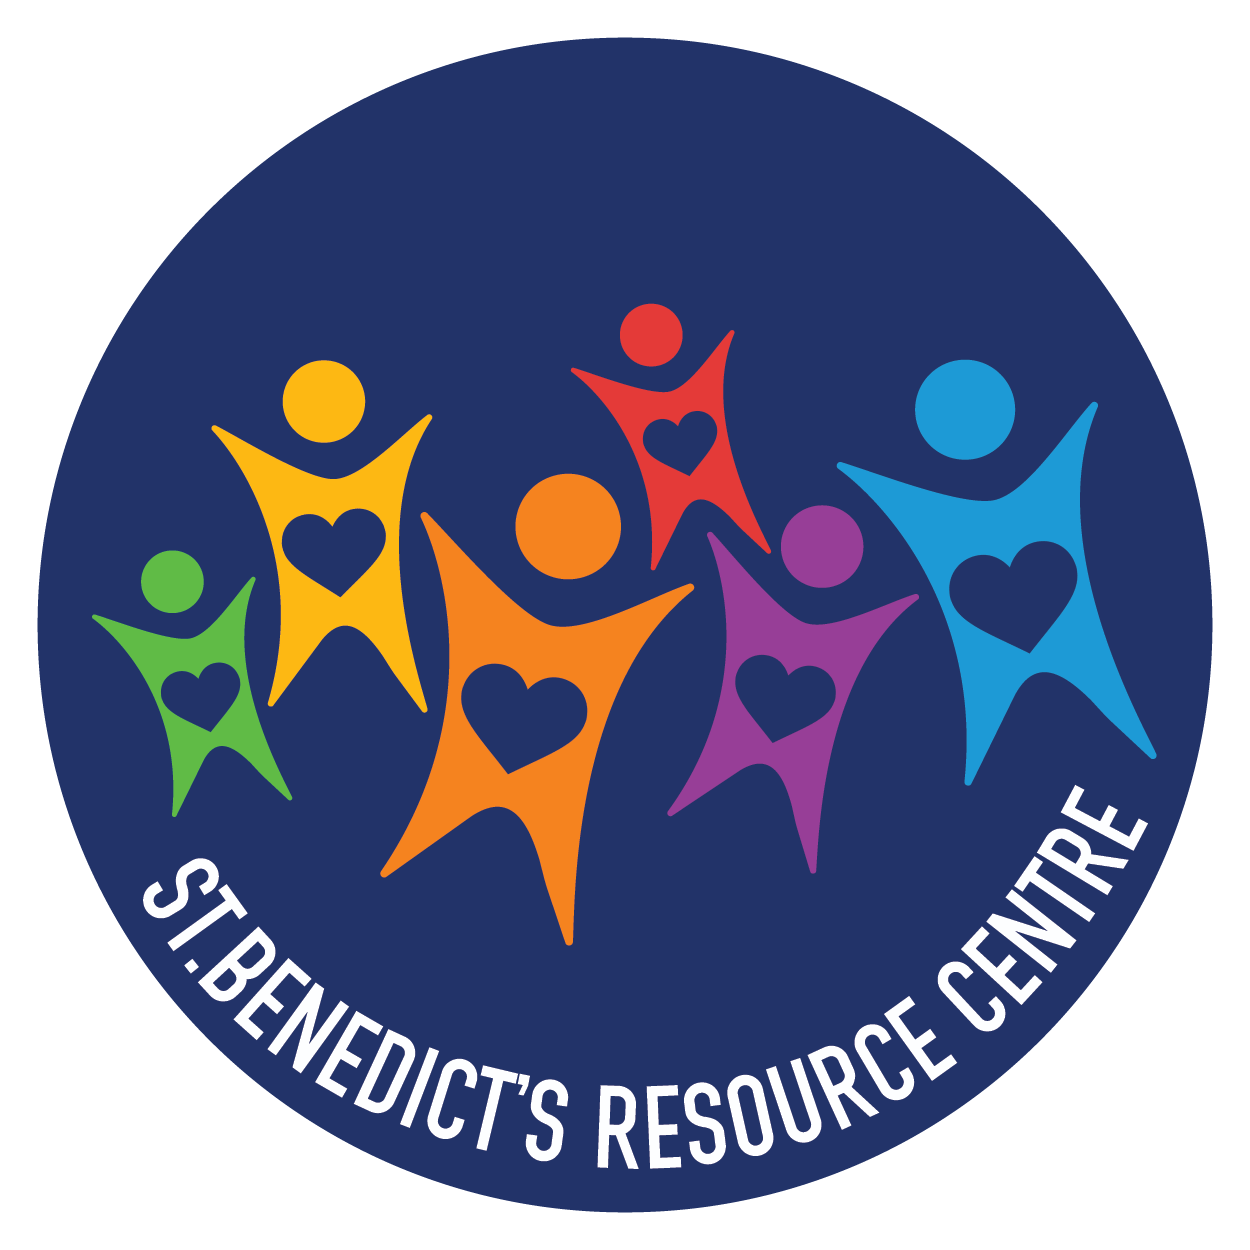 St Benedicts Resource Center